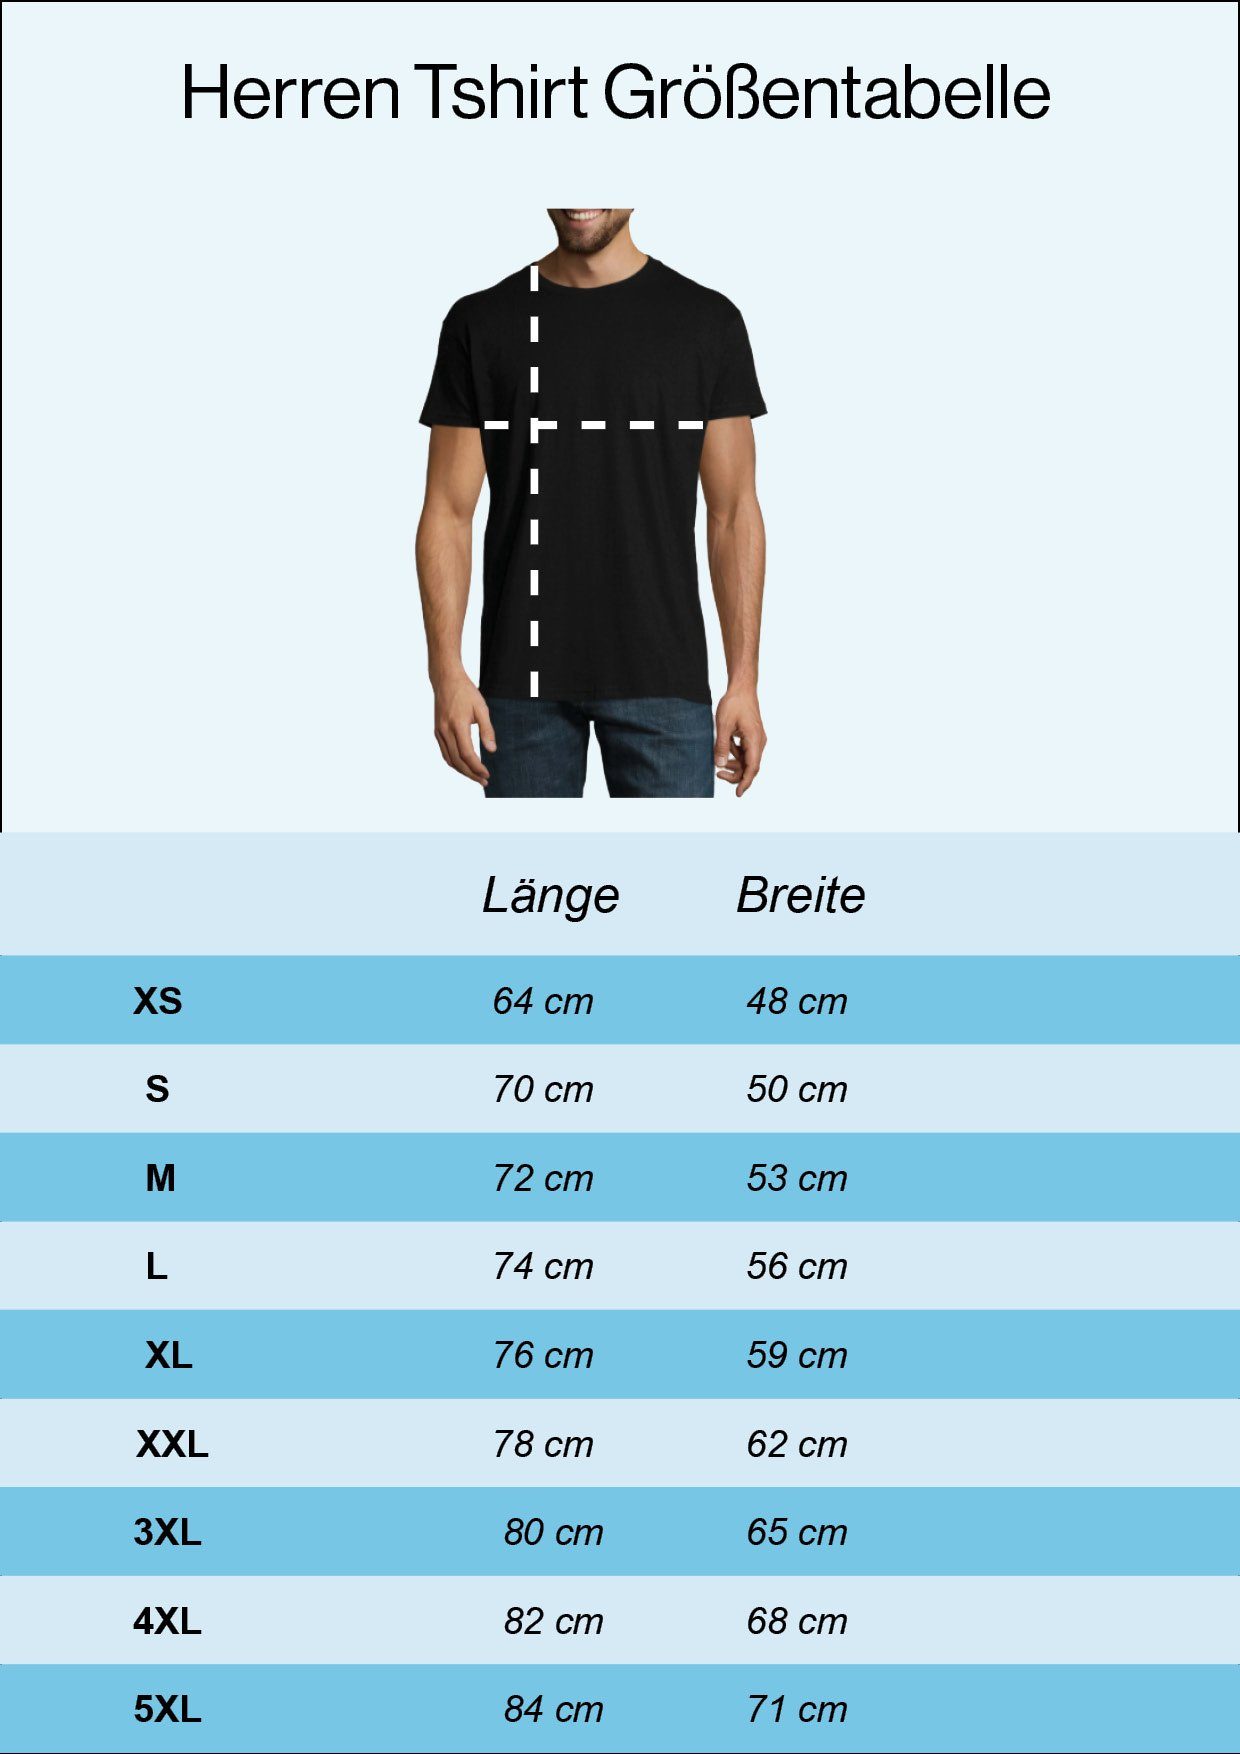 Youth Designz T-Shirt trendigem Shirt Downhill Bike mit Frontprint Herren Grau